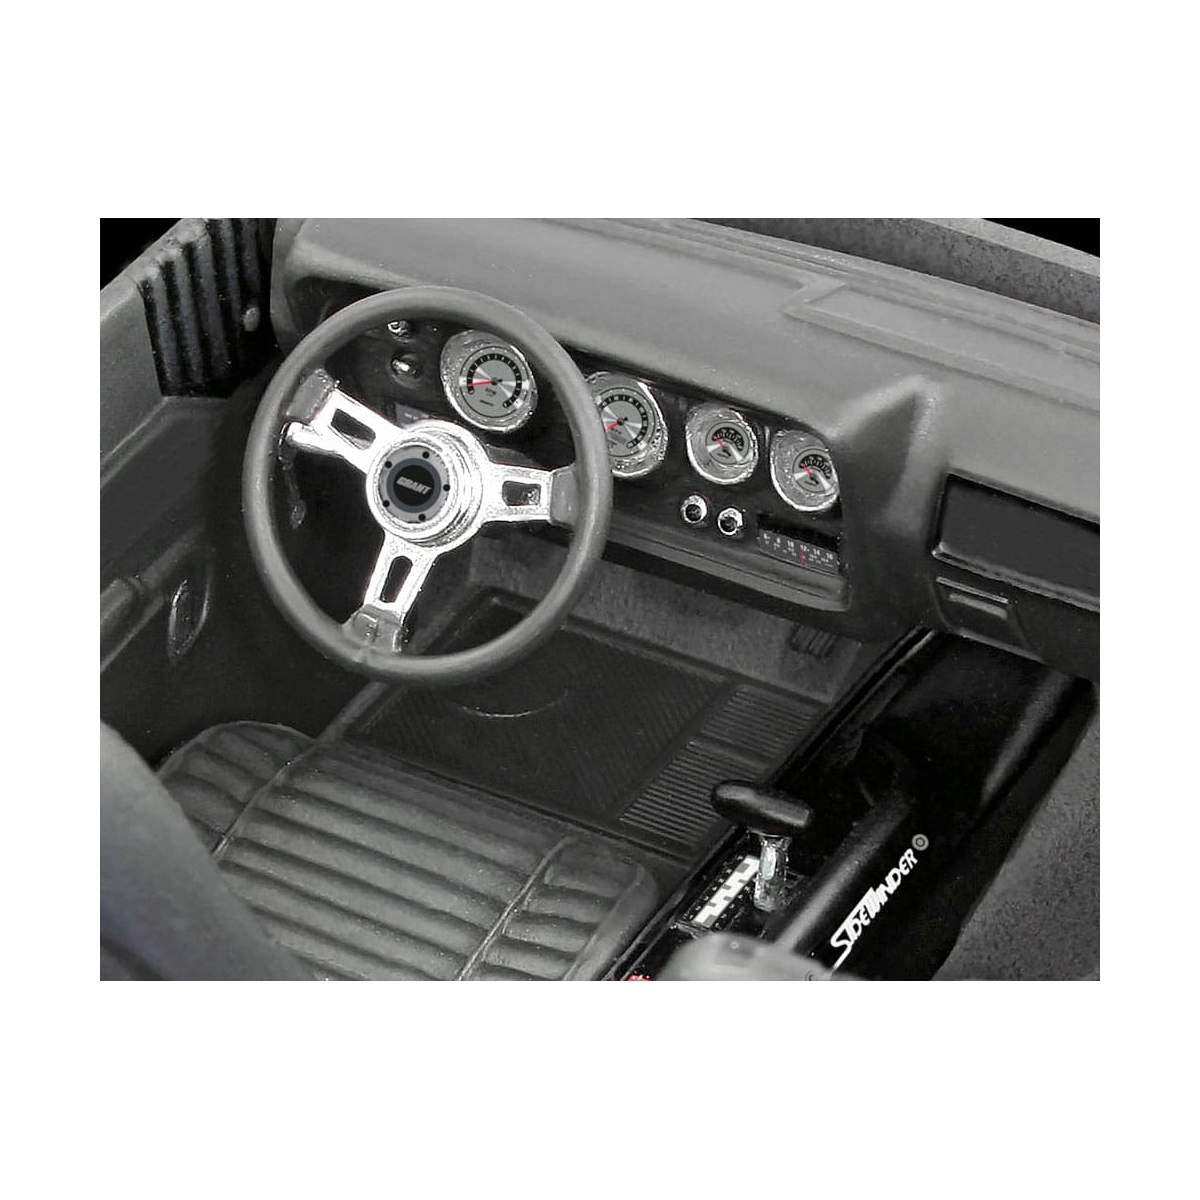 The Fast & Furious - Maquette avec accessoires Basic Dominic's